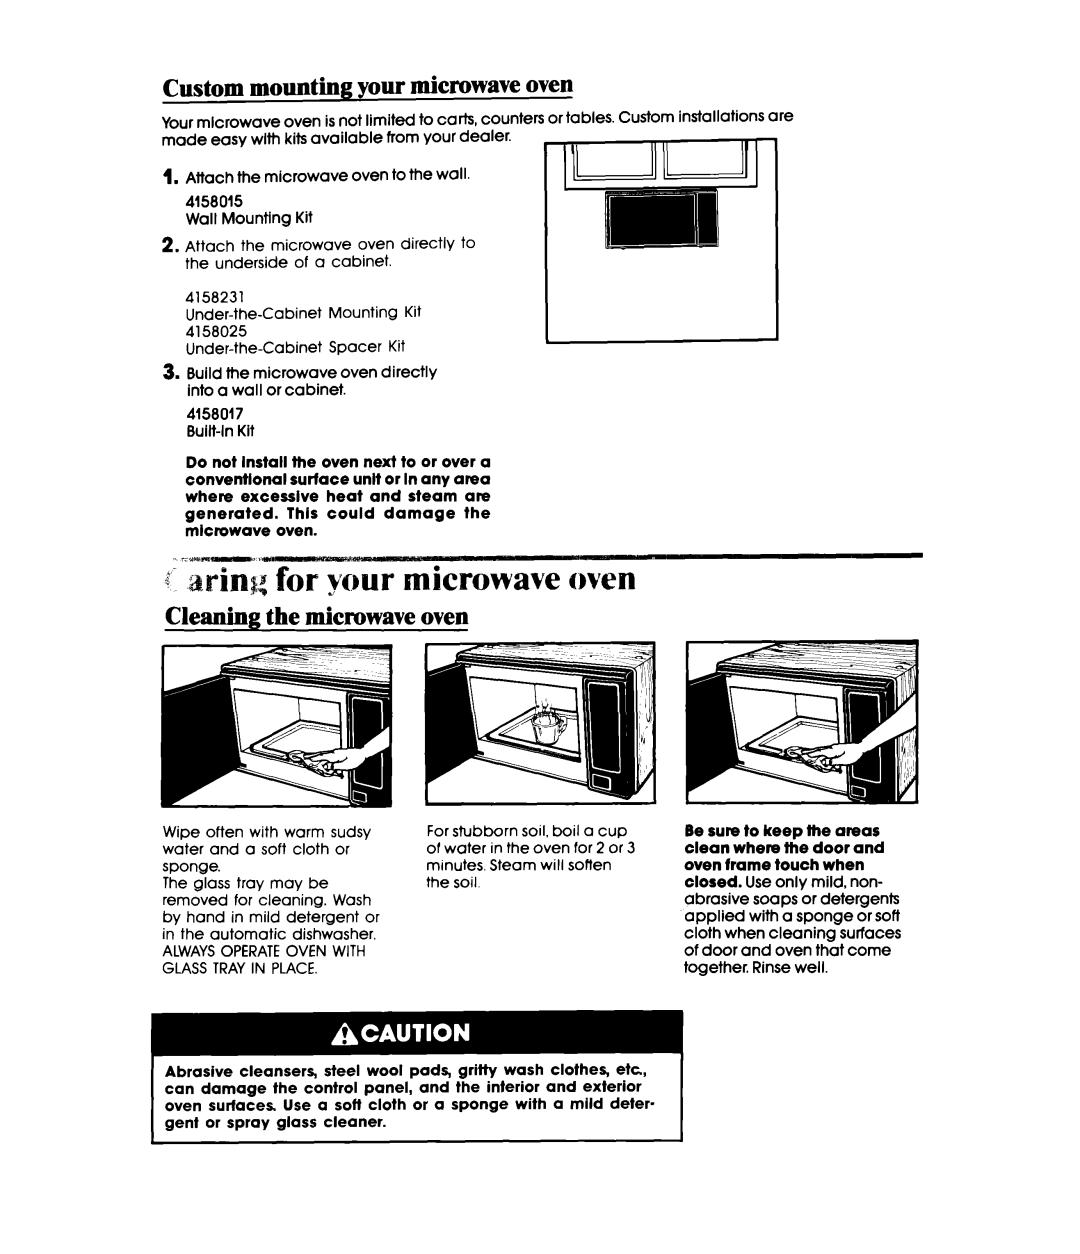 Whirlpool MW3601XW manual i’-~~i~~~foryour microwave oven, Custom mounting your microwave oven, Cleaning the microwave oven 